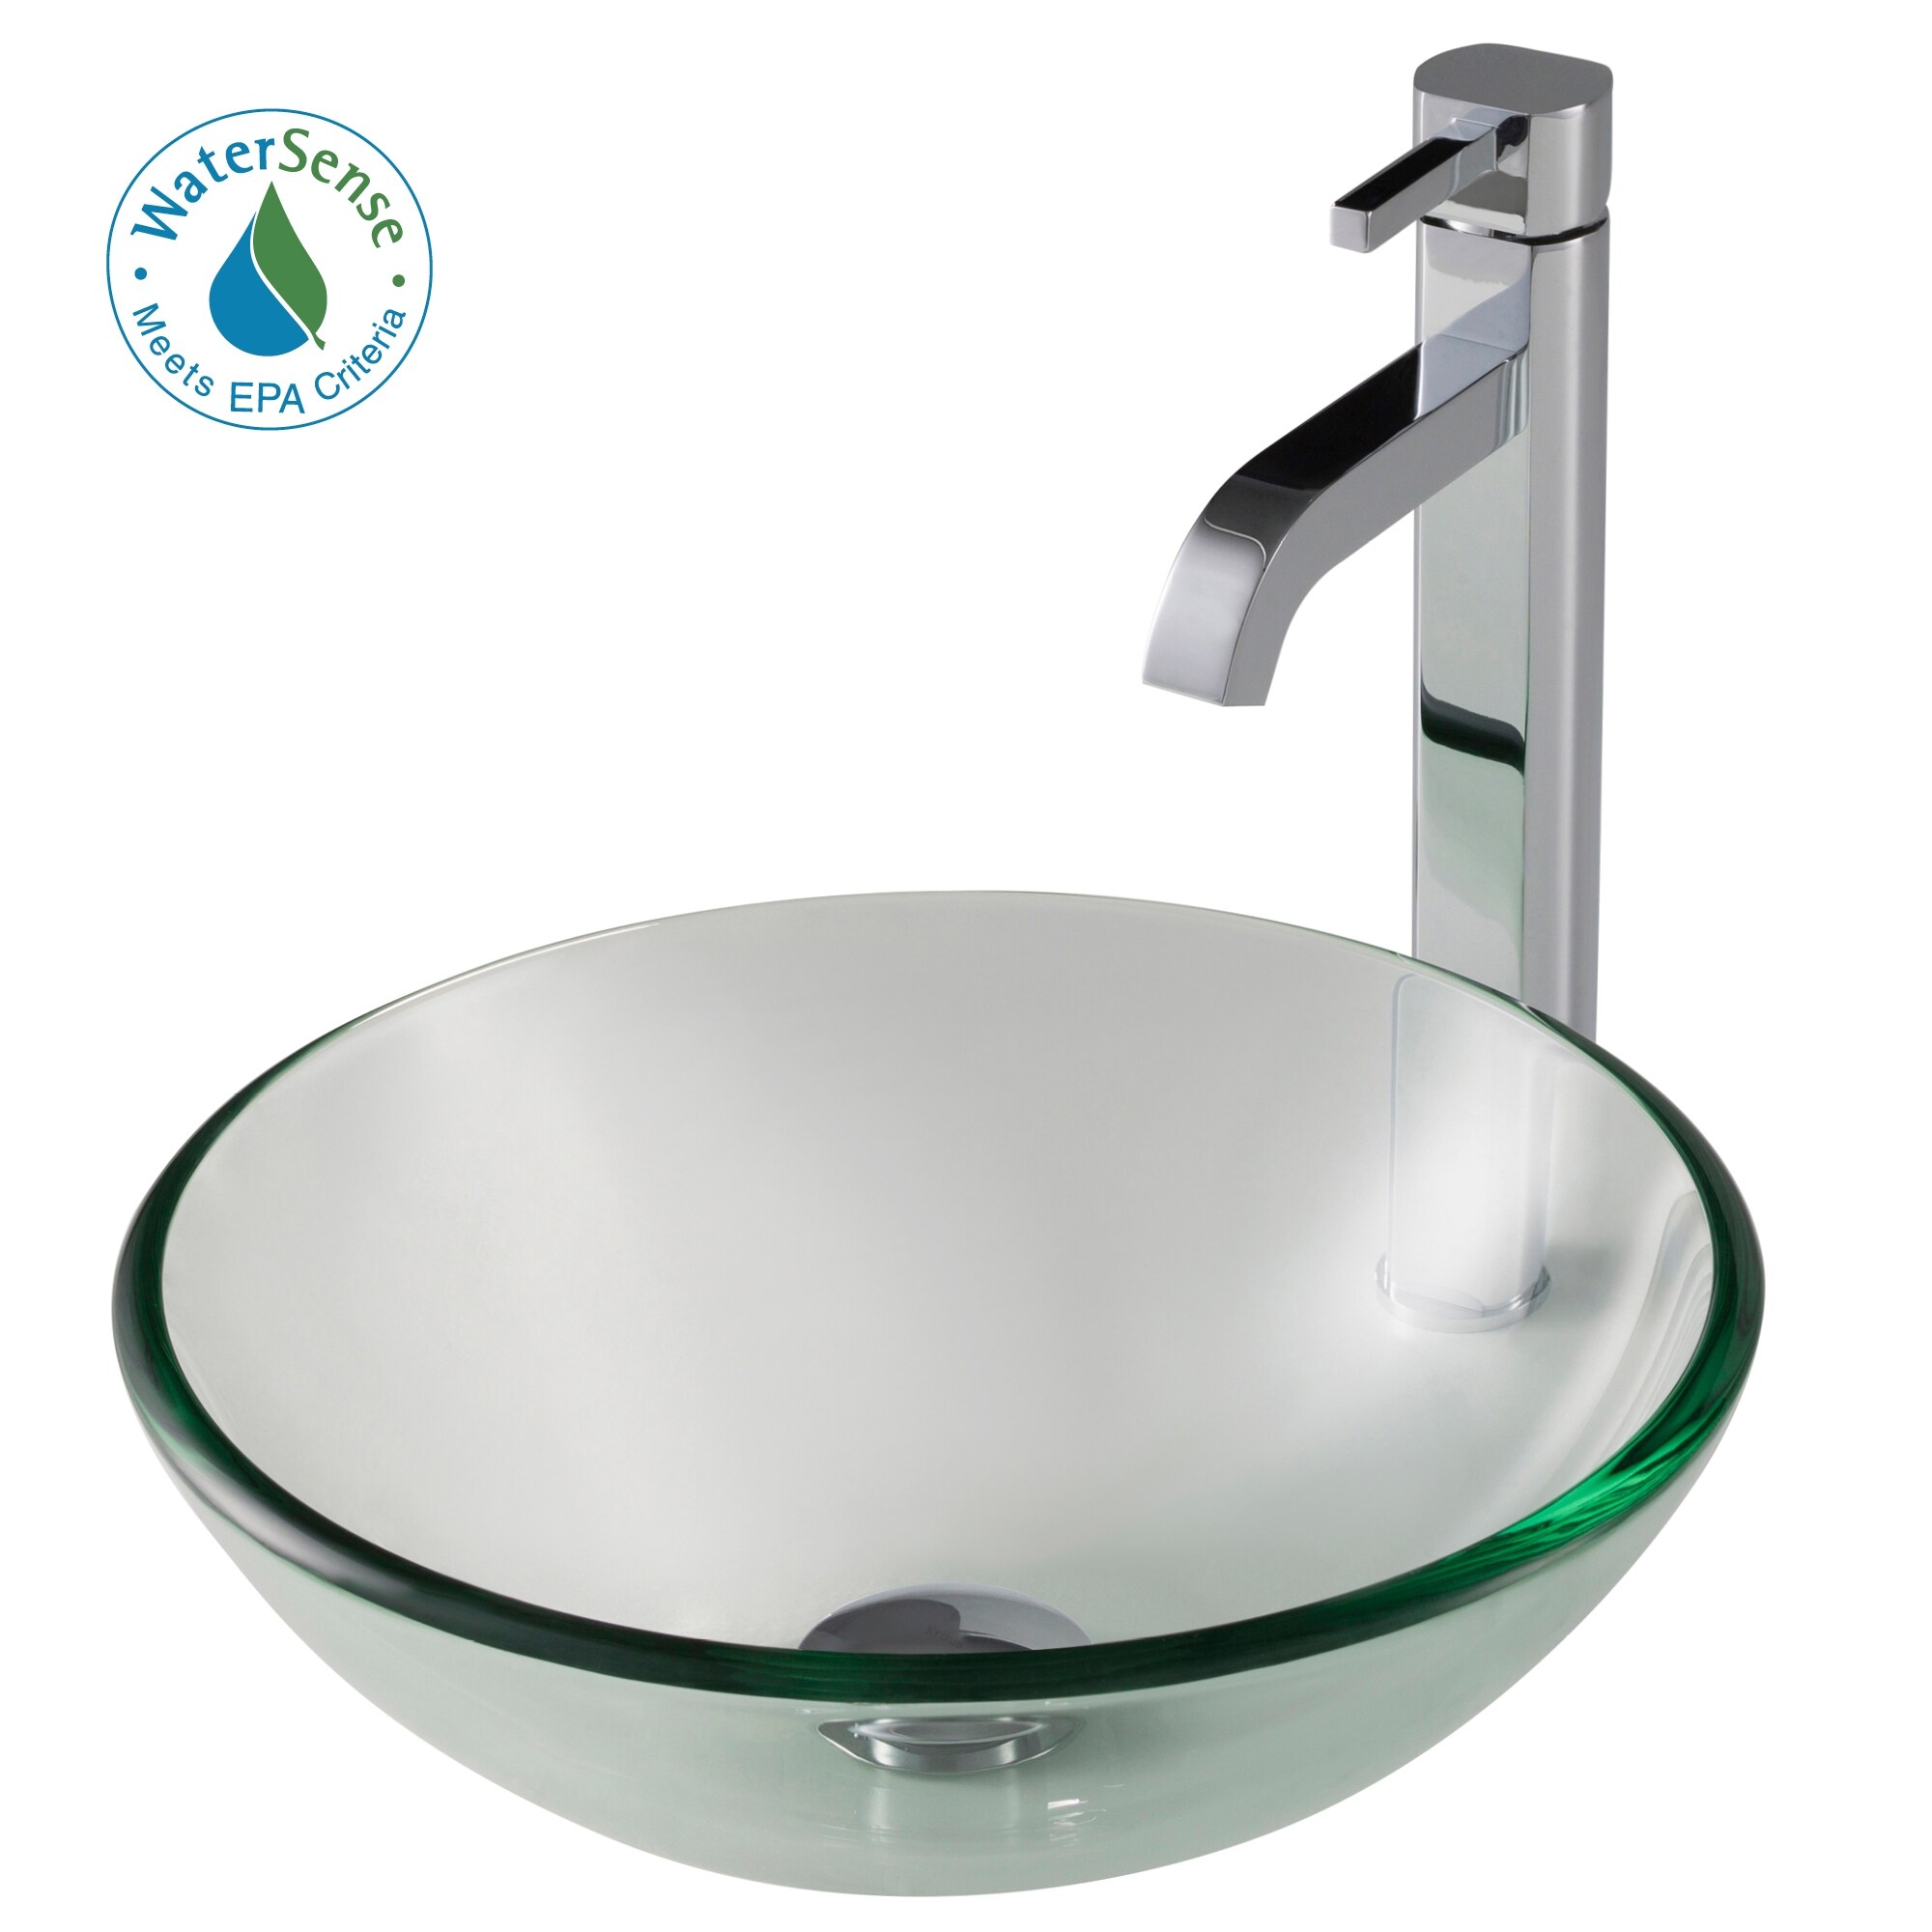 Kraus Glass Vessel Sink, Bathroom Faucet, Pop Up Drain, Mounting Ring